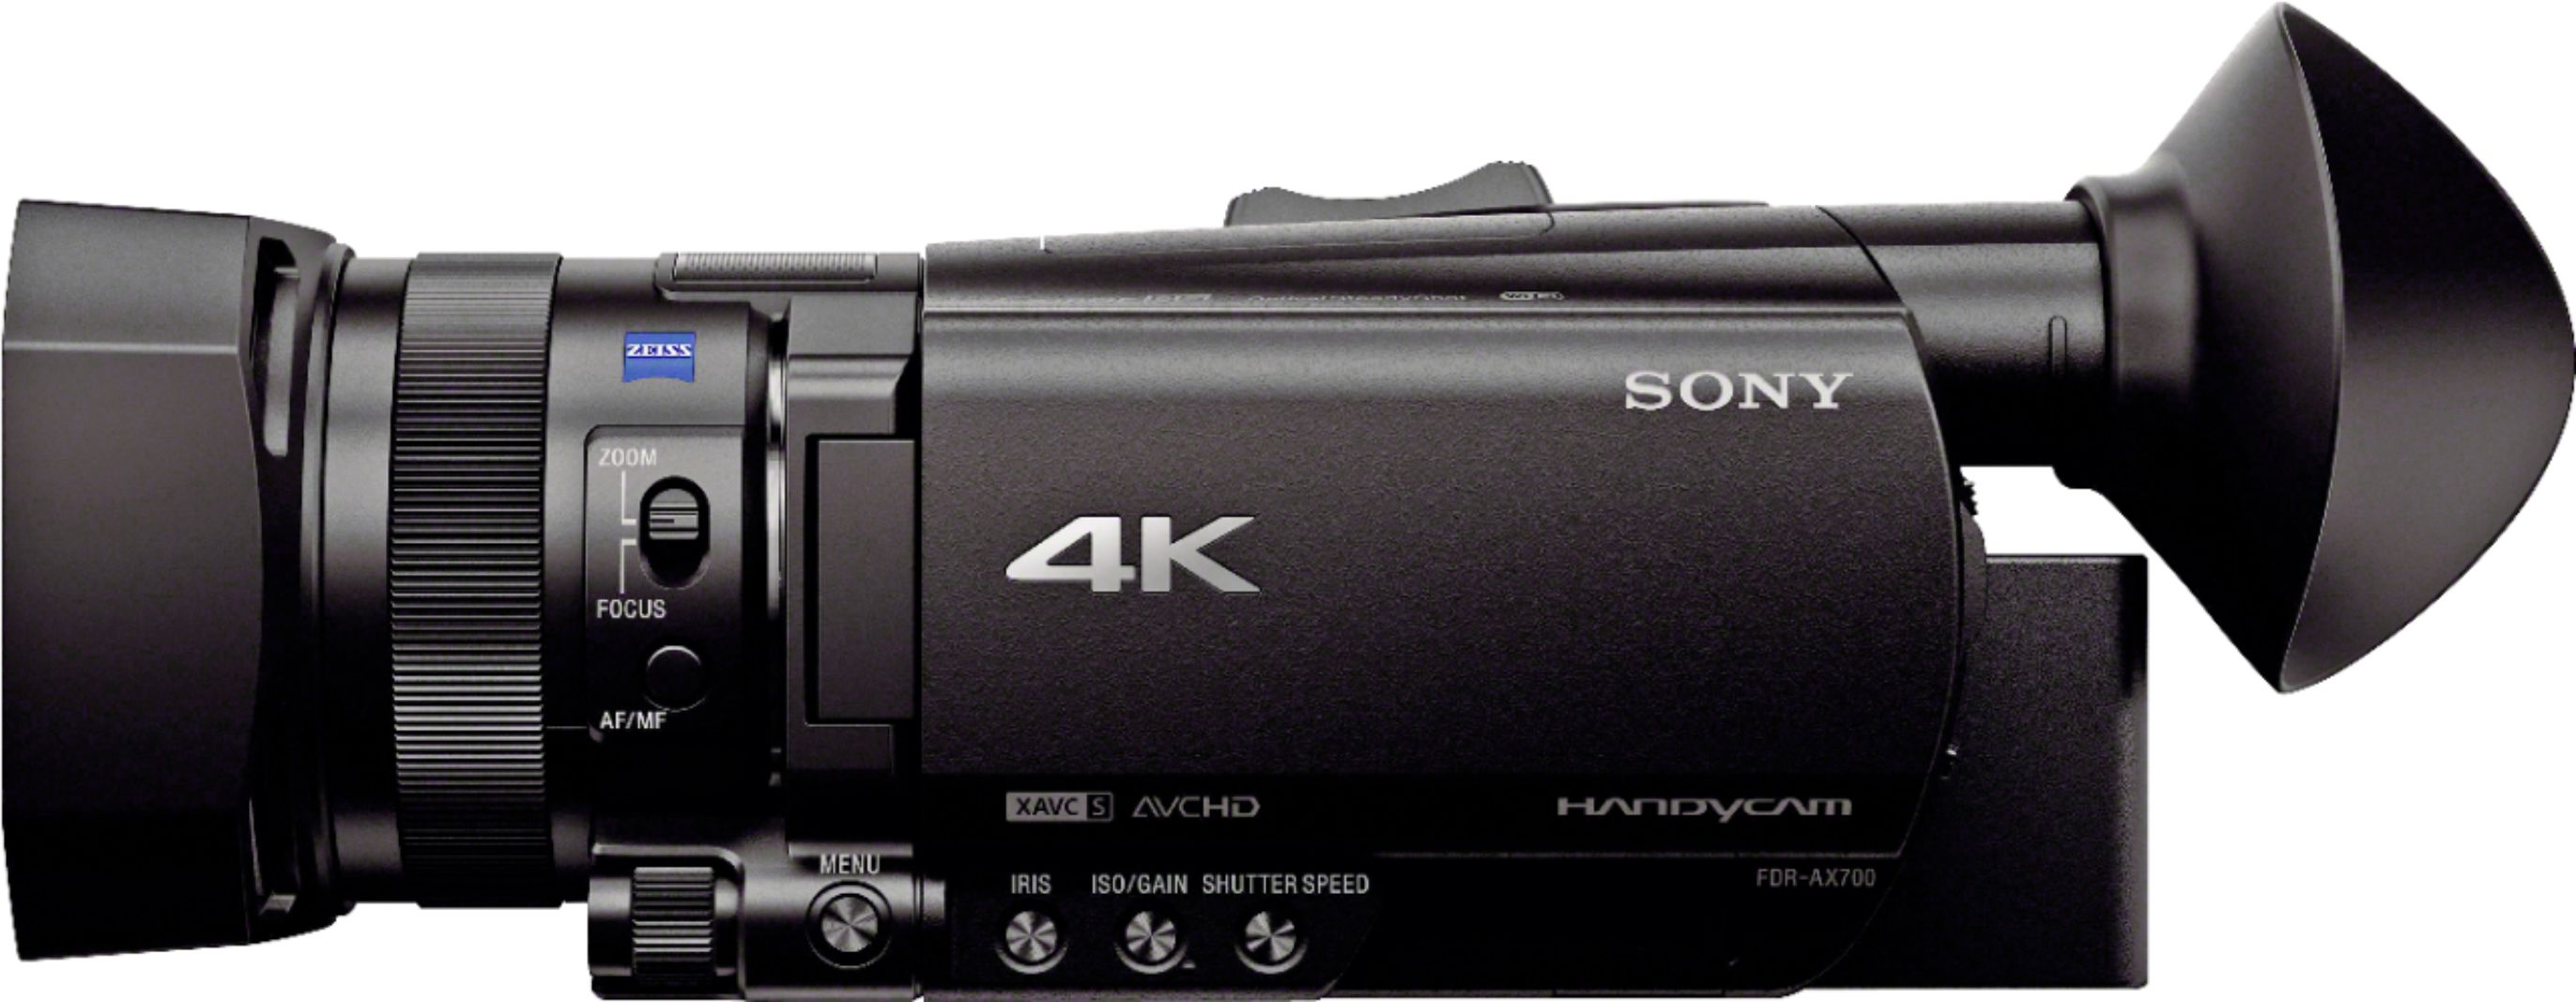 newness Seaside Fascinate Sony Handycam FDR-AX700 4K Premium Camcorder black FDRAX700/B - Best Buy